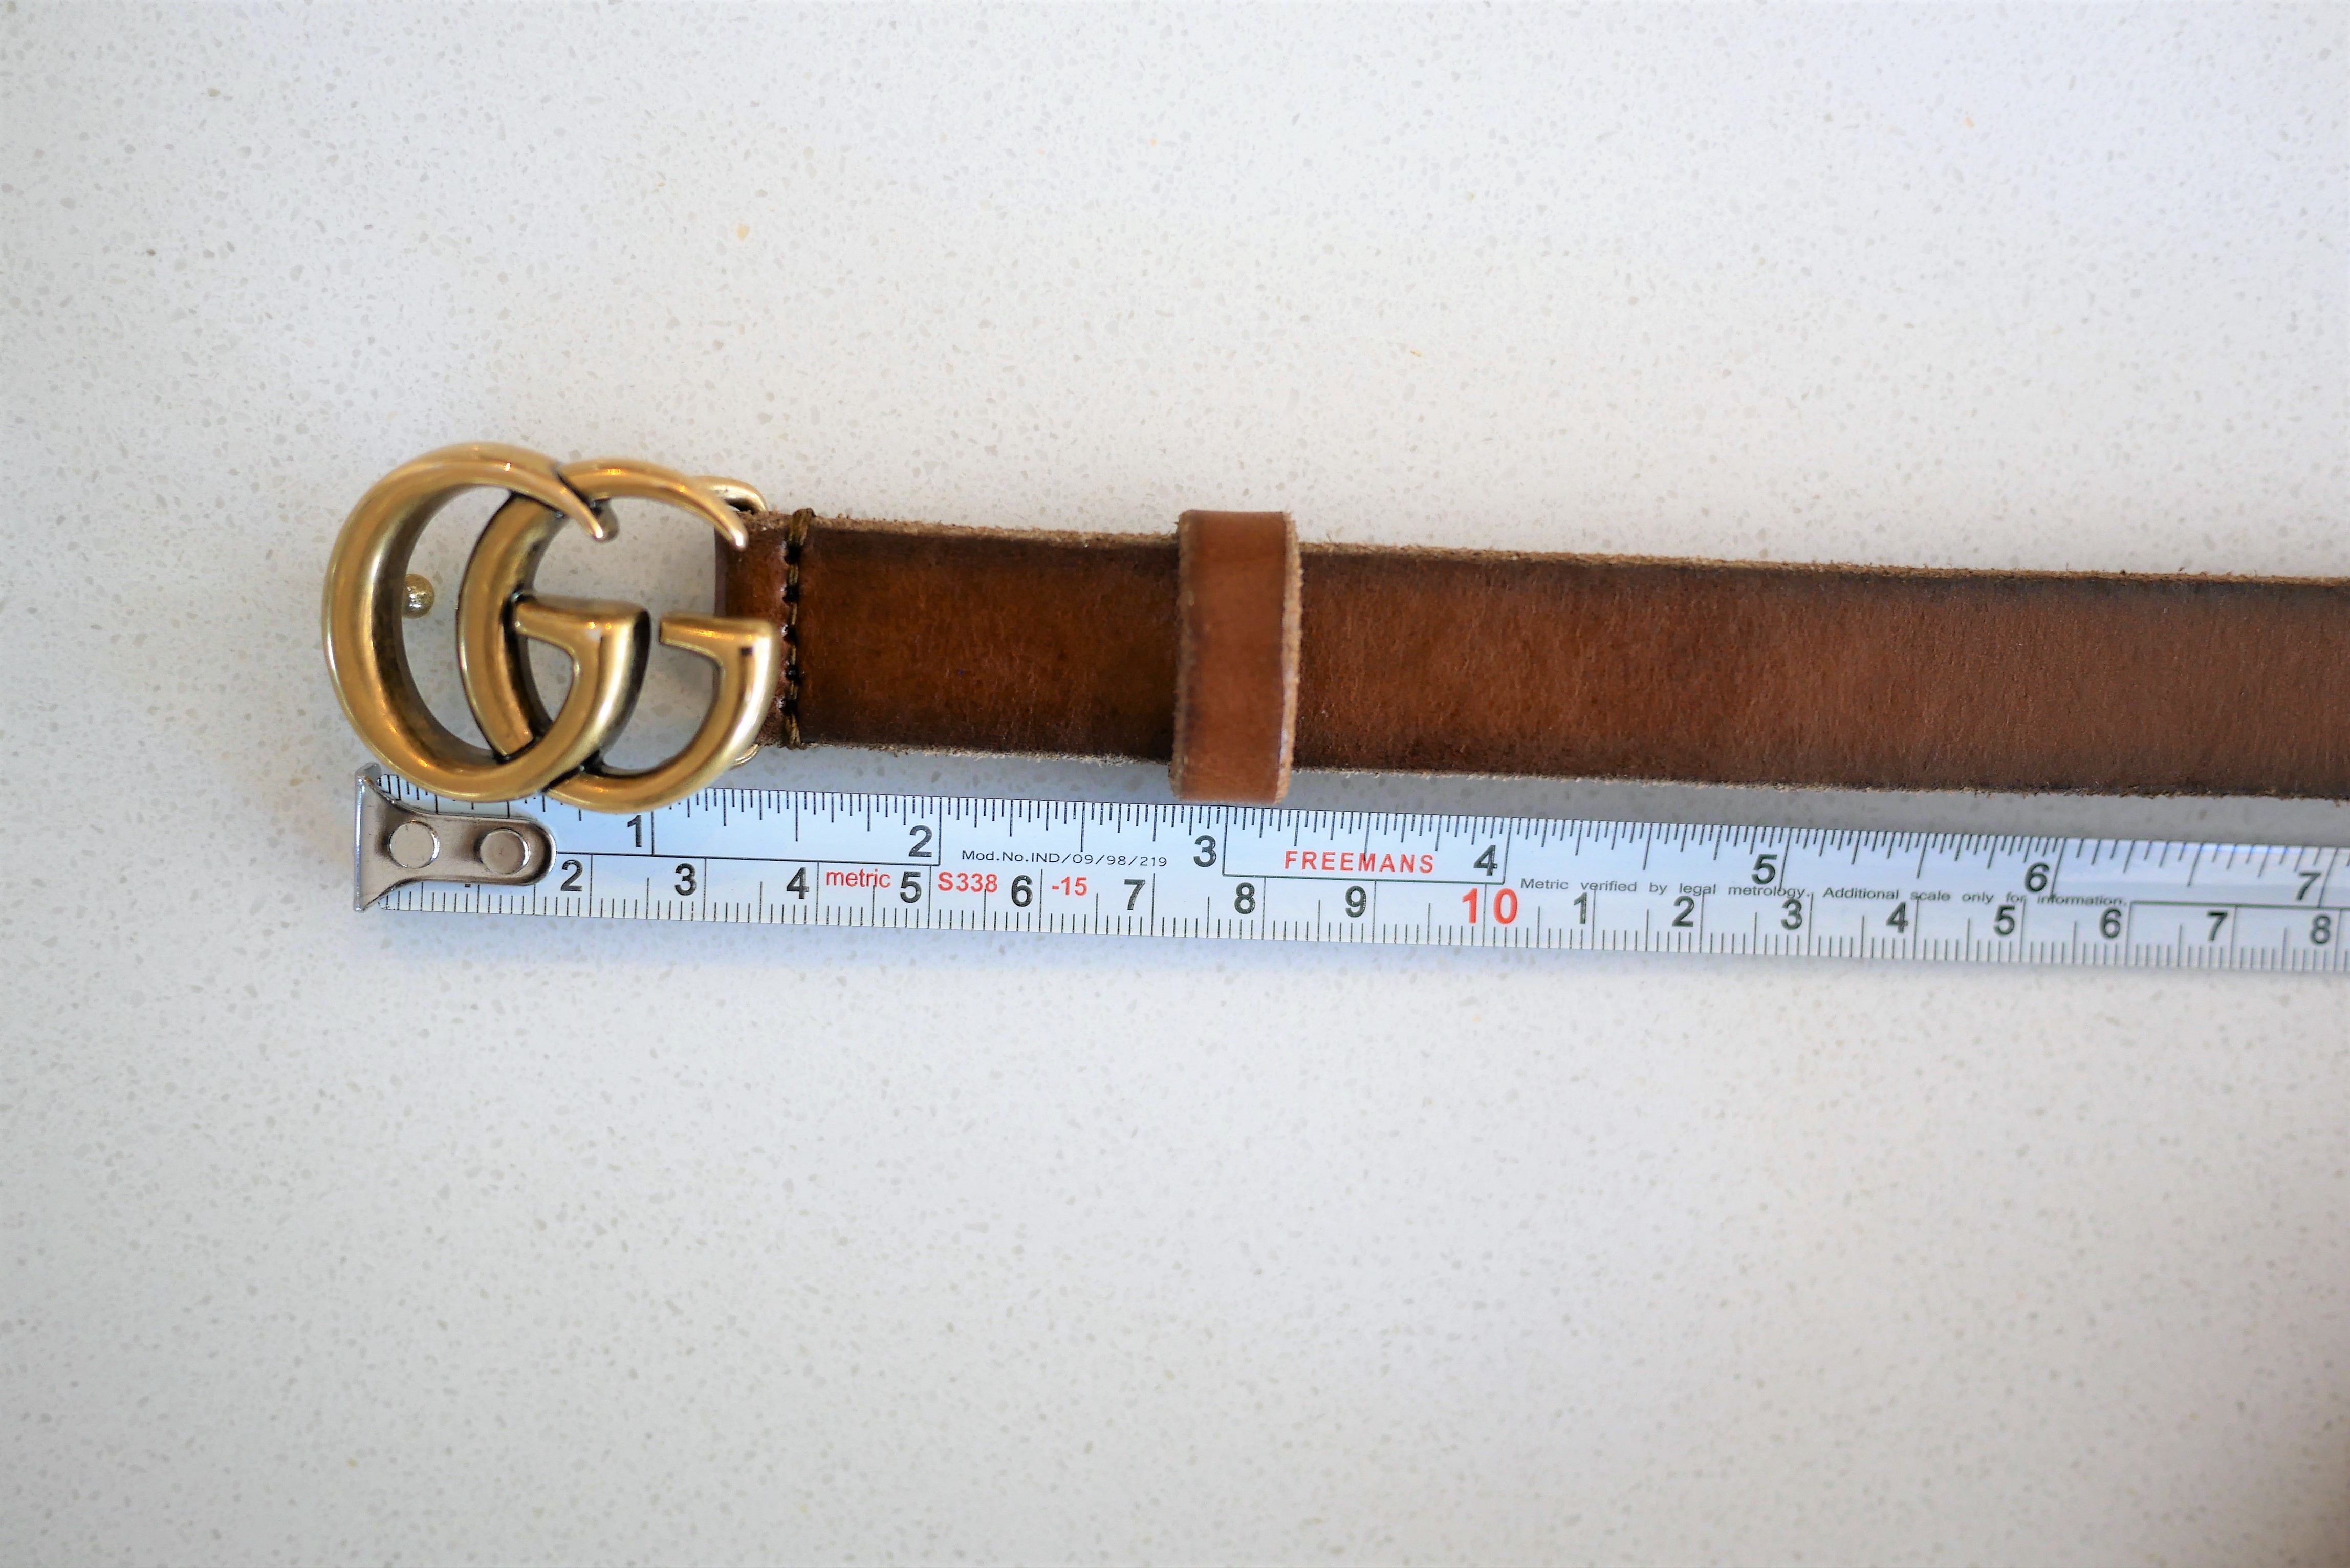 gucci belt size 100 conversion